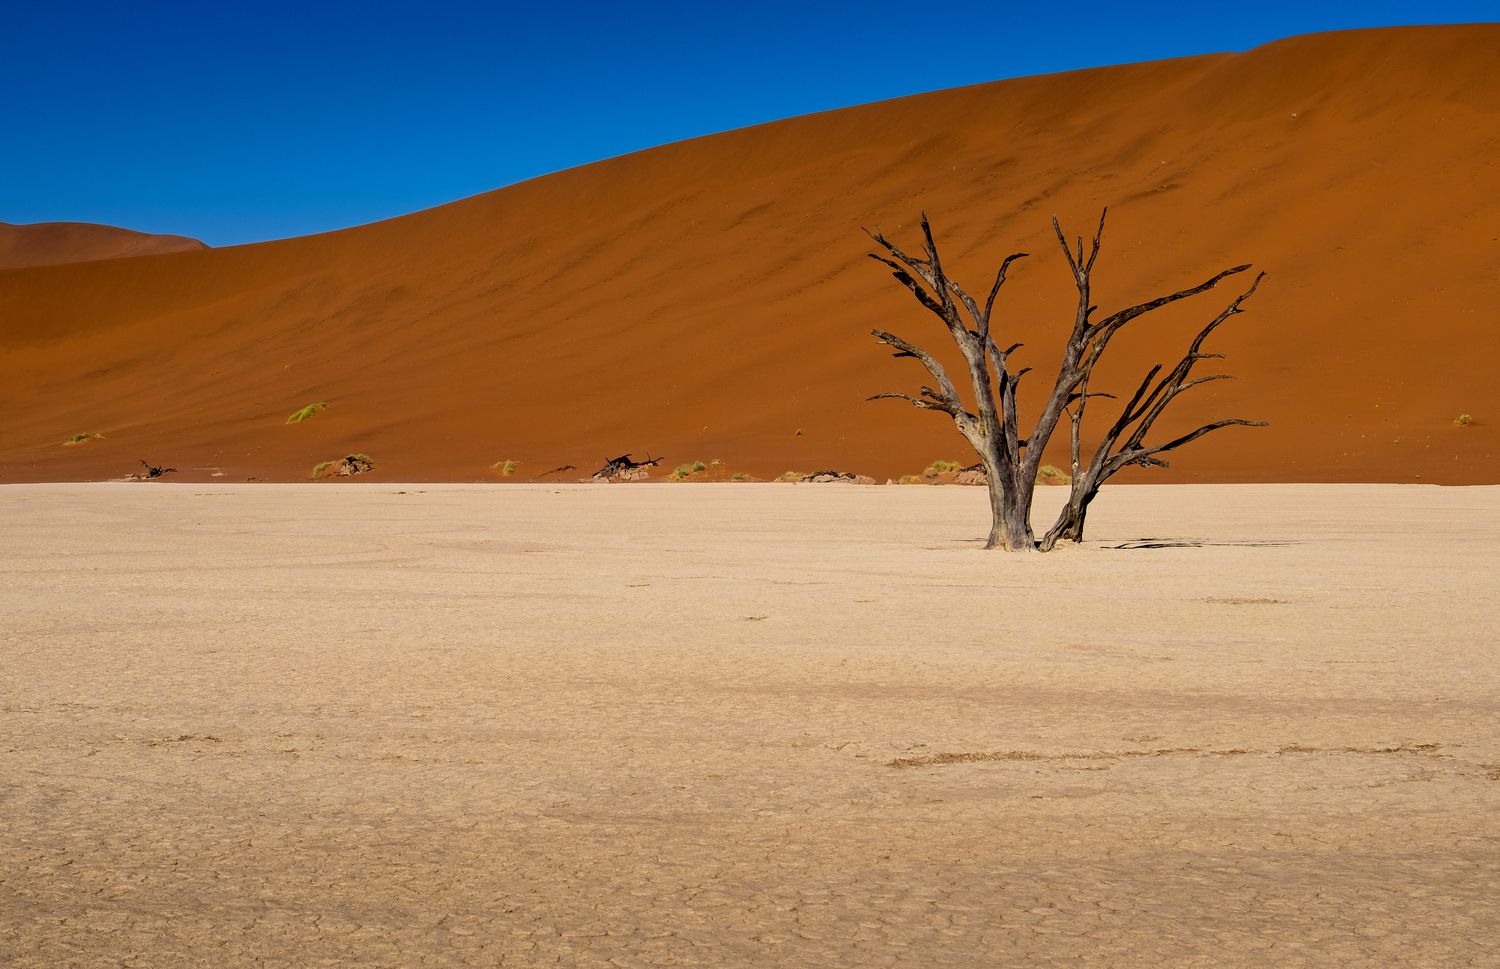 мертвая долина, долина смерти, соссусфлей, нд, намибия, пустыня намиб, пустыня, намибия нд, песок, дерево, дюна, пейзаж, природа,сухое дерево, dead valley, death valley, sossusvlei, namibia, namib desert, desert, sand, tree, dune, dry tree, Демкина Надежда